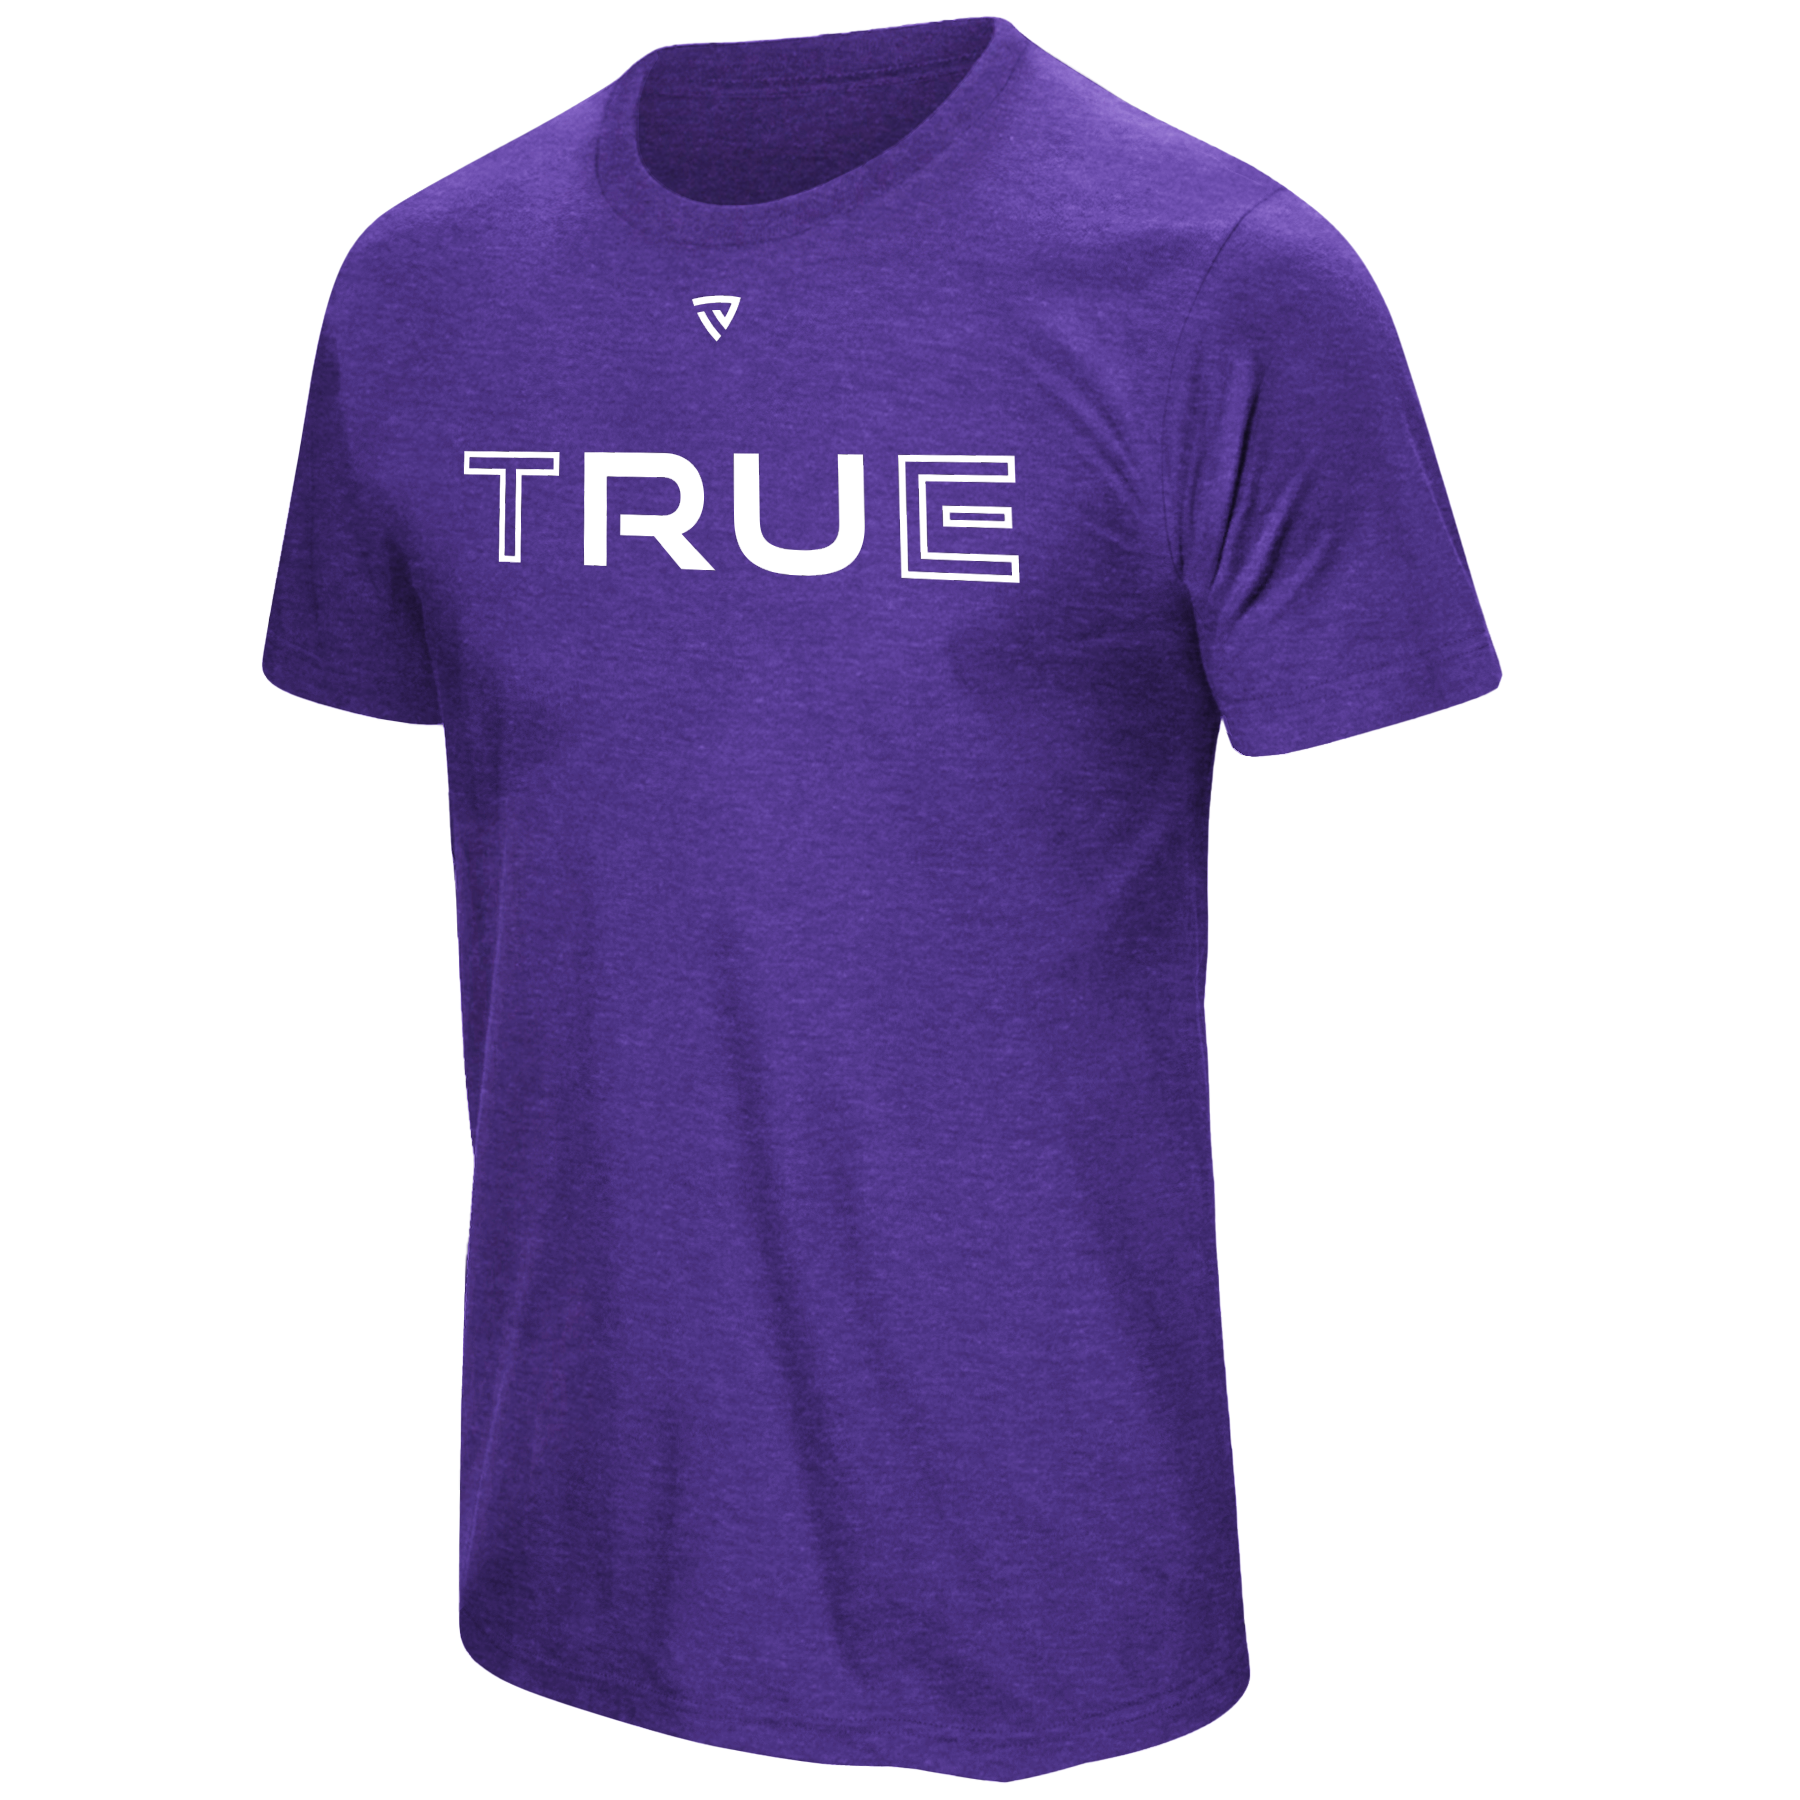 Men's RU TRUE Purple Tee